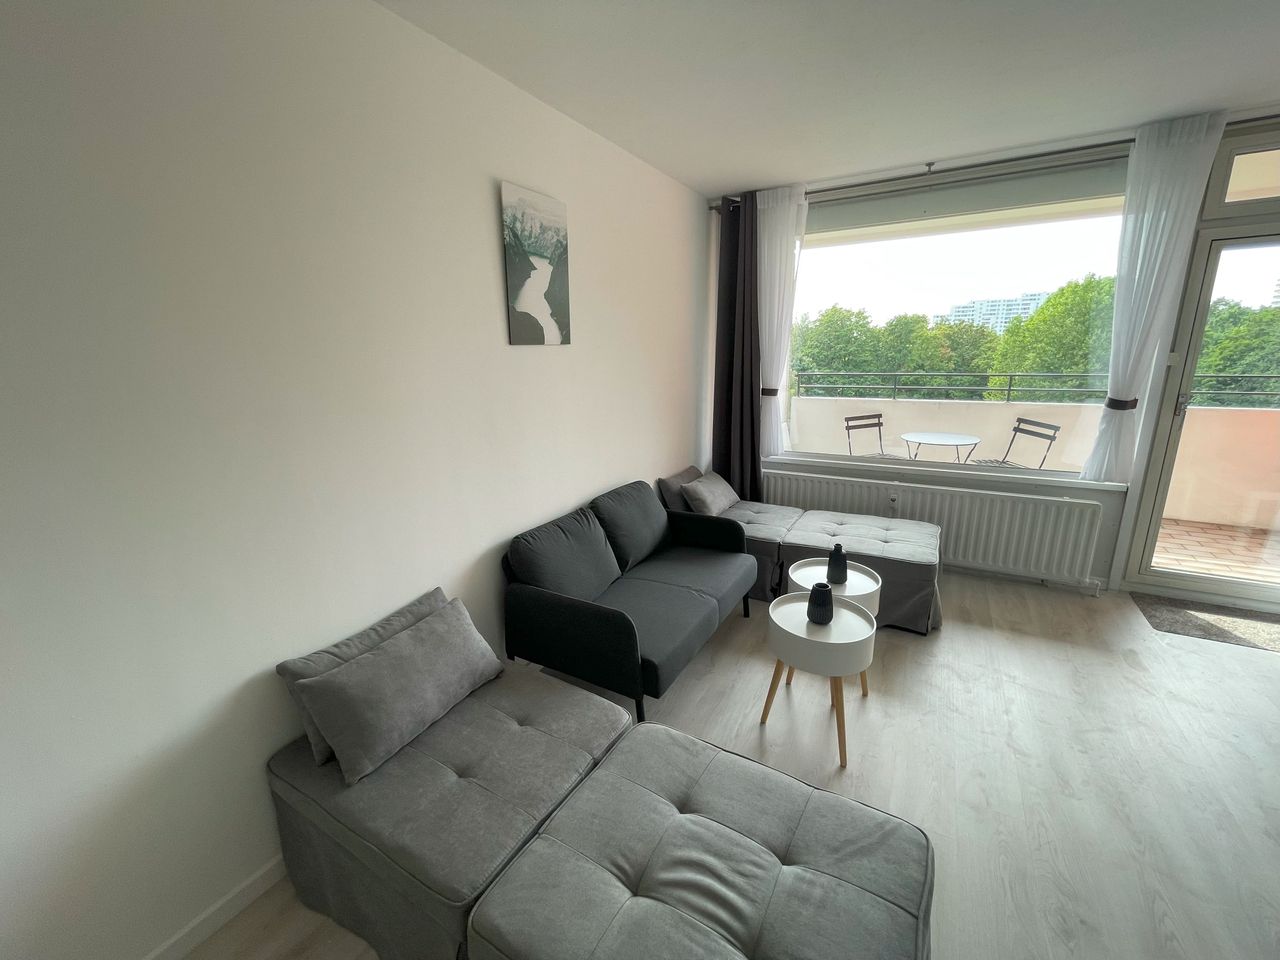 Renovated 2-room flat in Ratingen West